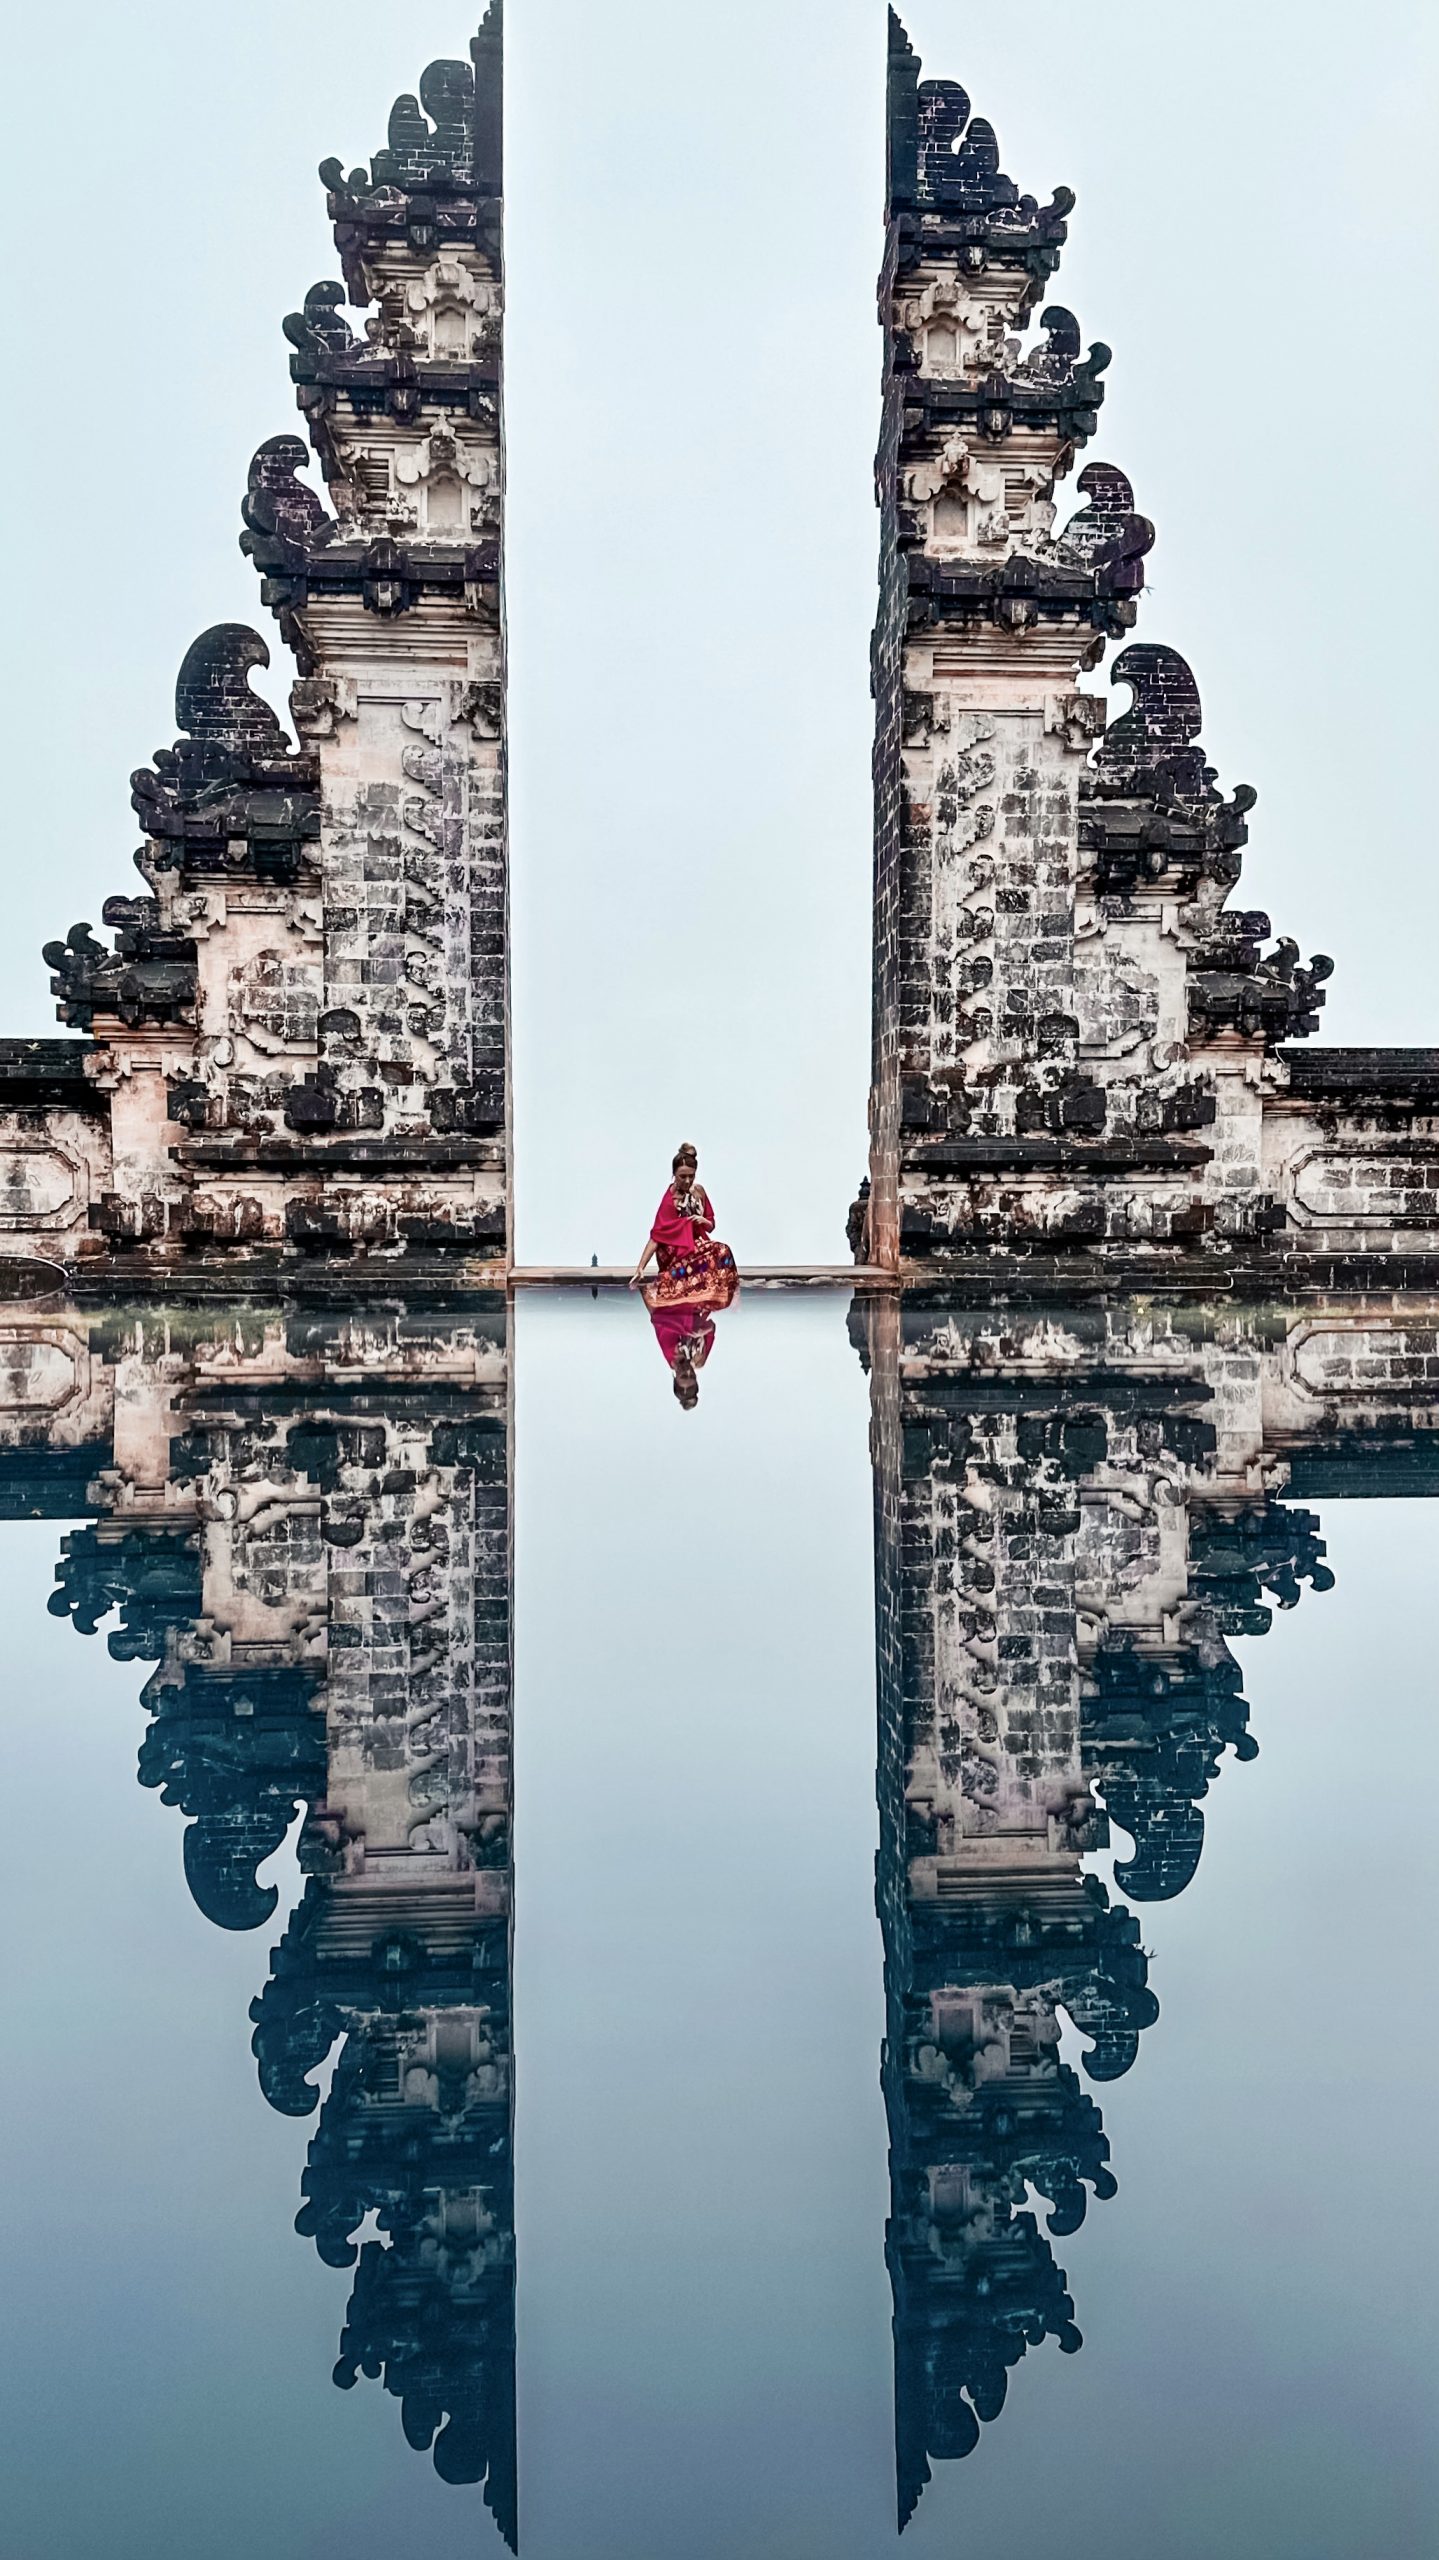 Lempuyang Temple, The Gates of Heaven, Bali